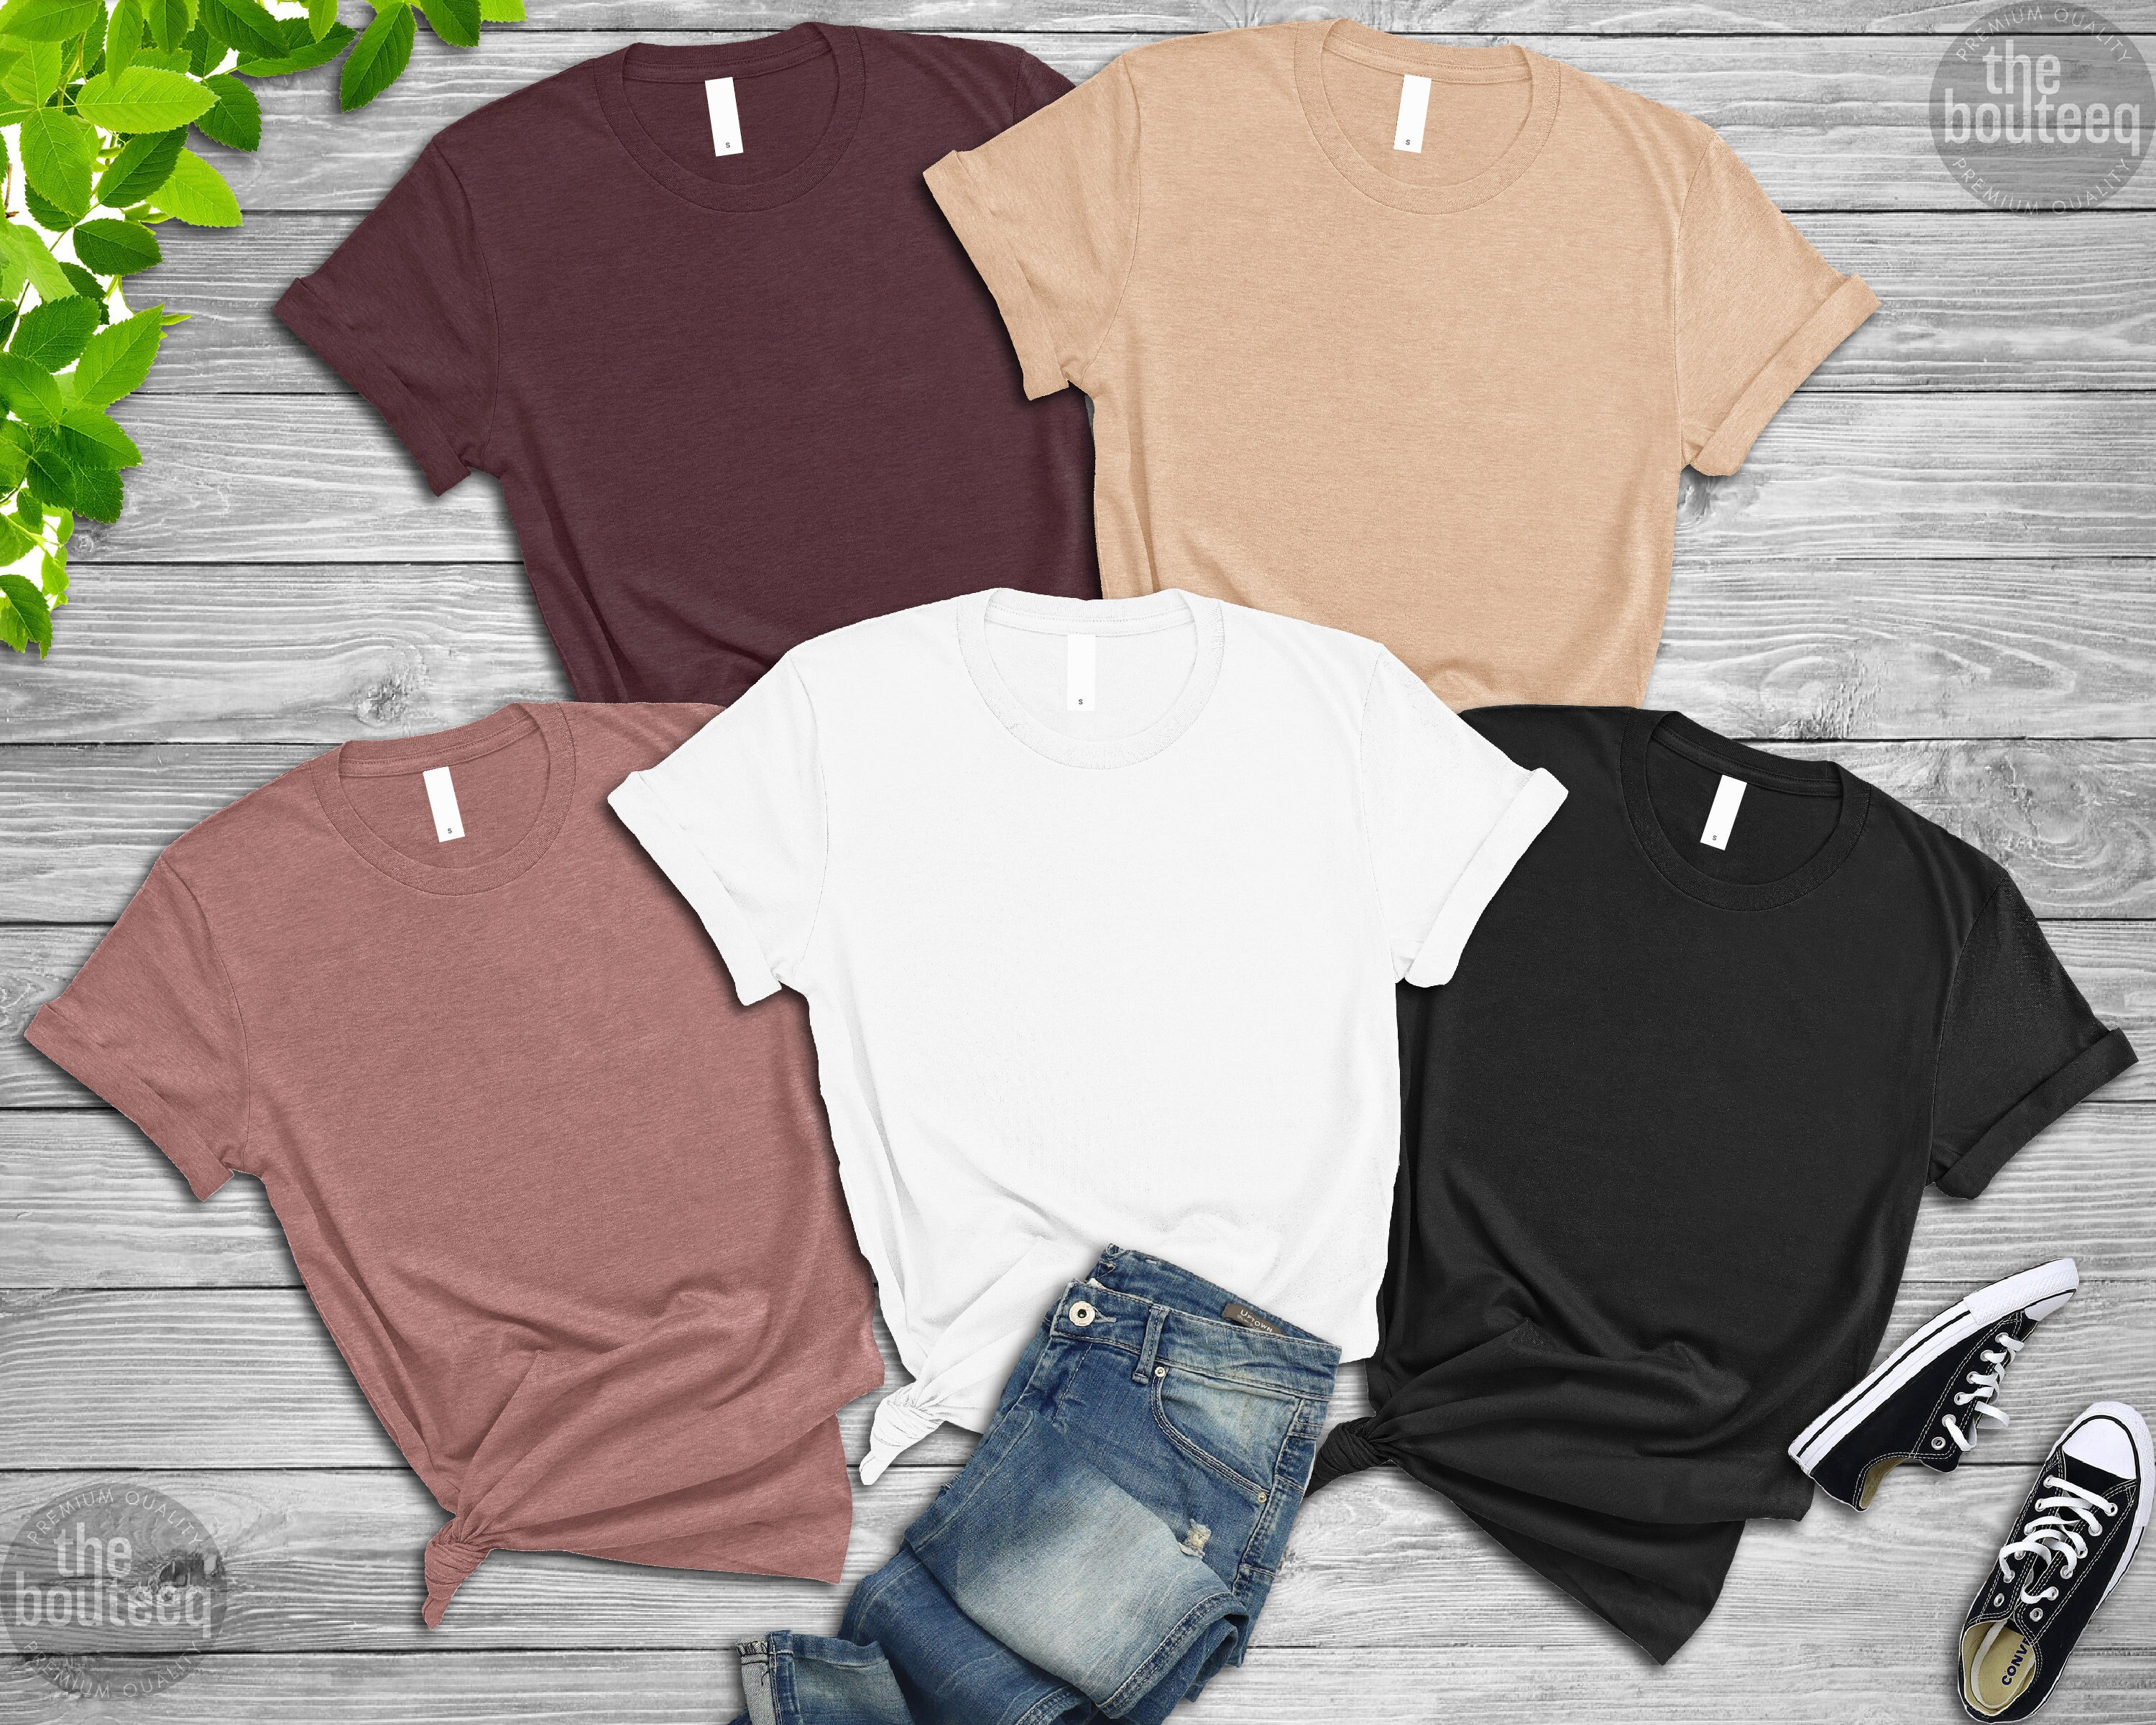 Blank T-Shirts Wholesale  Bulk T-Shirts Starting at $2